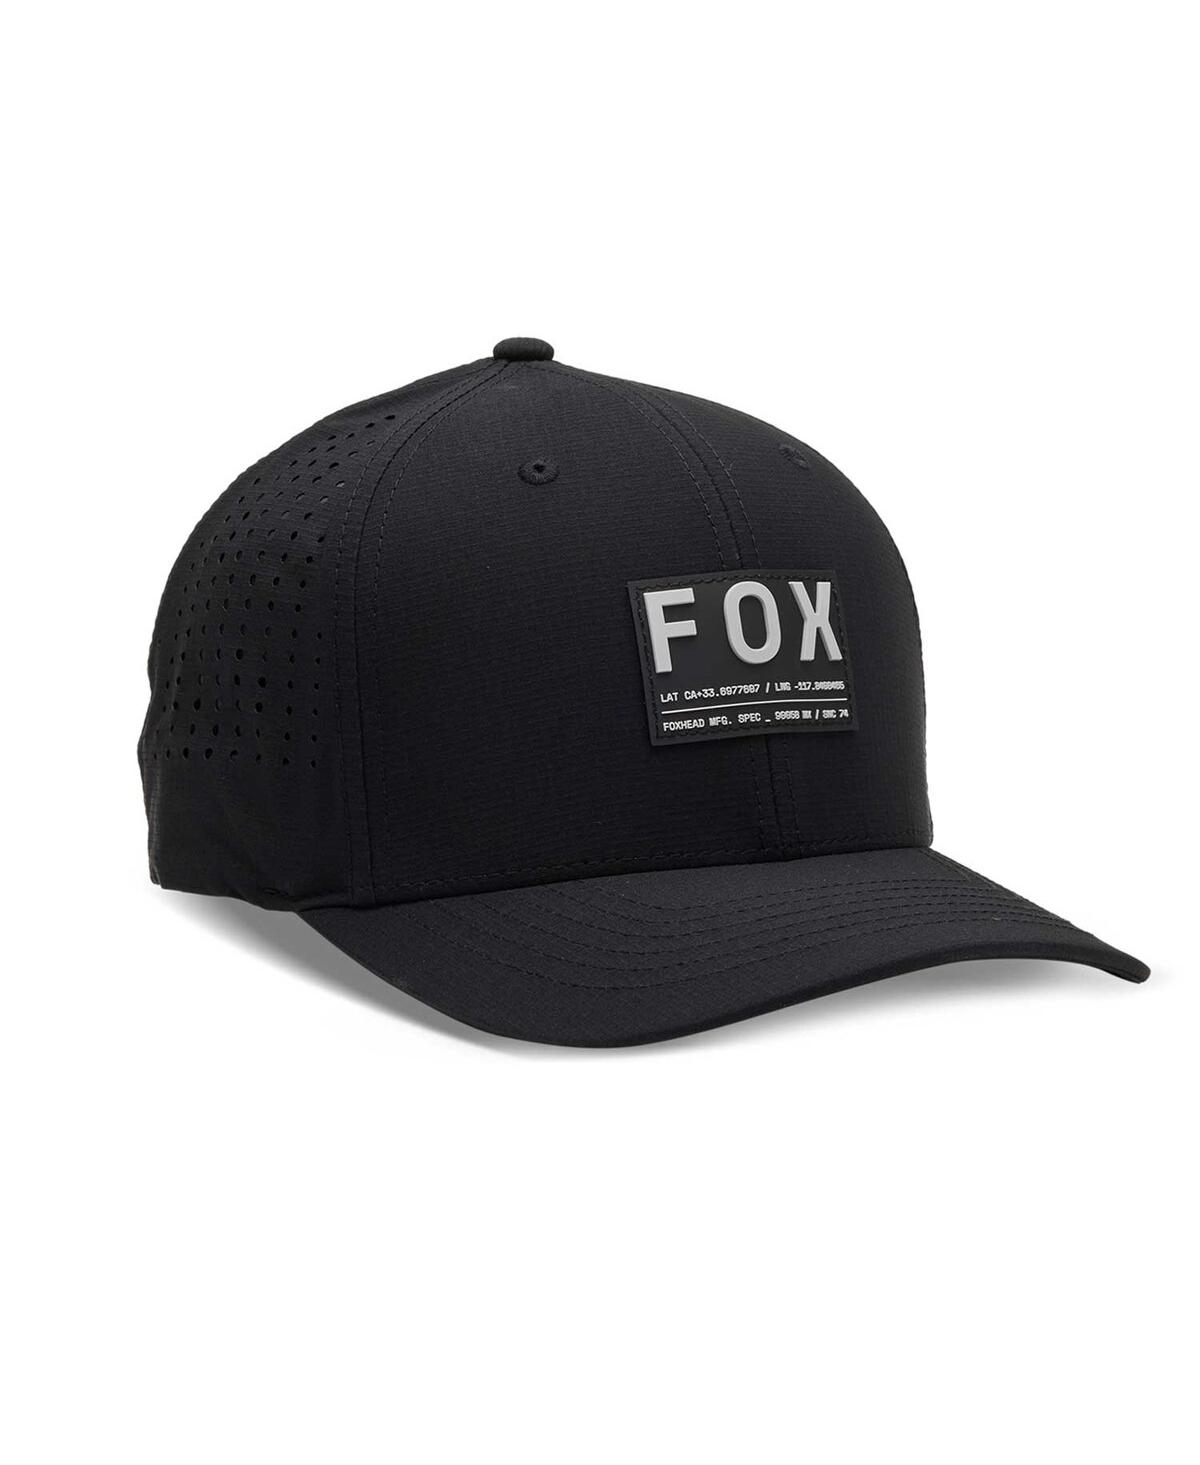 Men's Fox Black Non-Stop Tech Flex Hat - Black